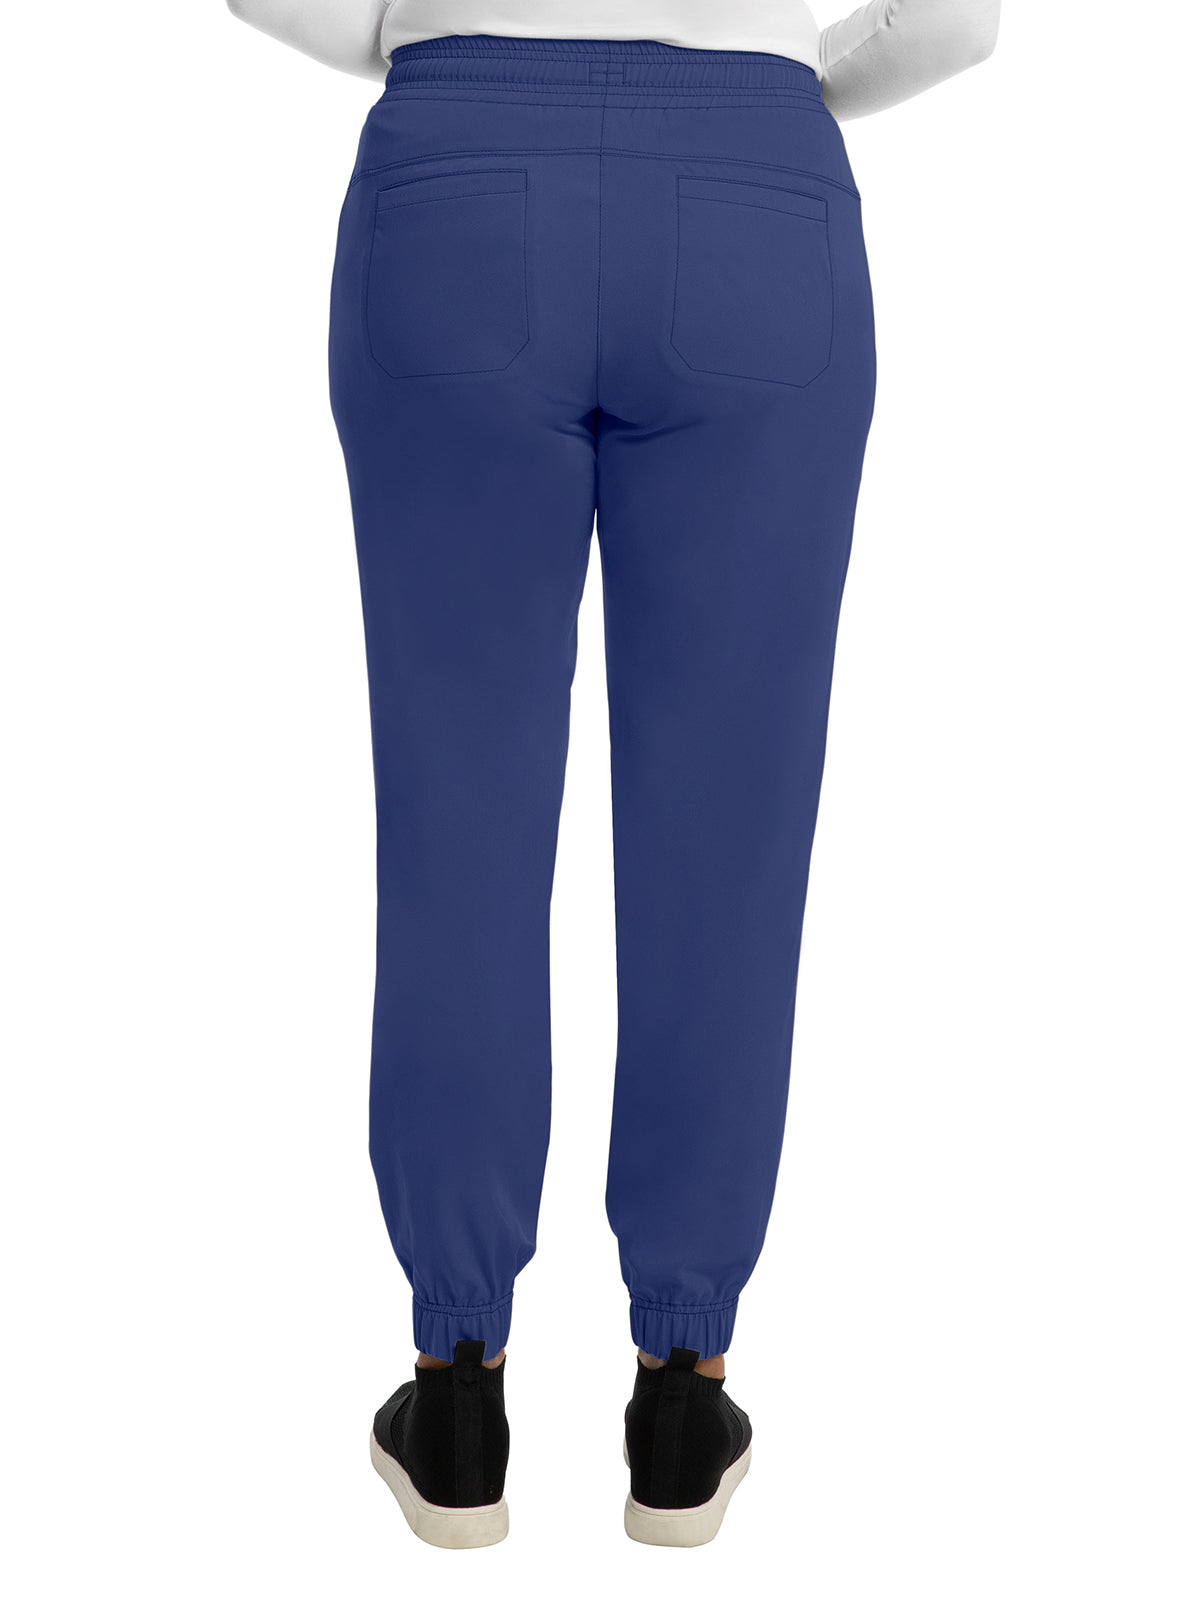 Women's Four-Way Stretch Fabric Pant - 9575 - Navy